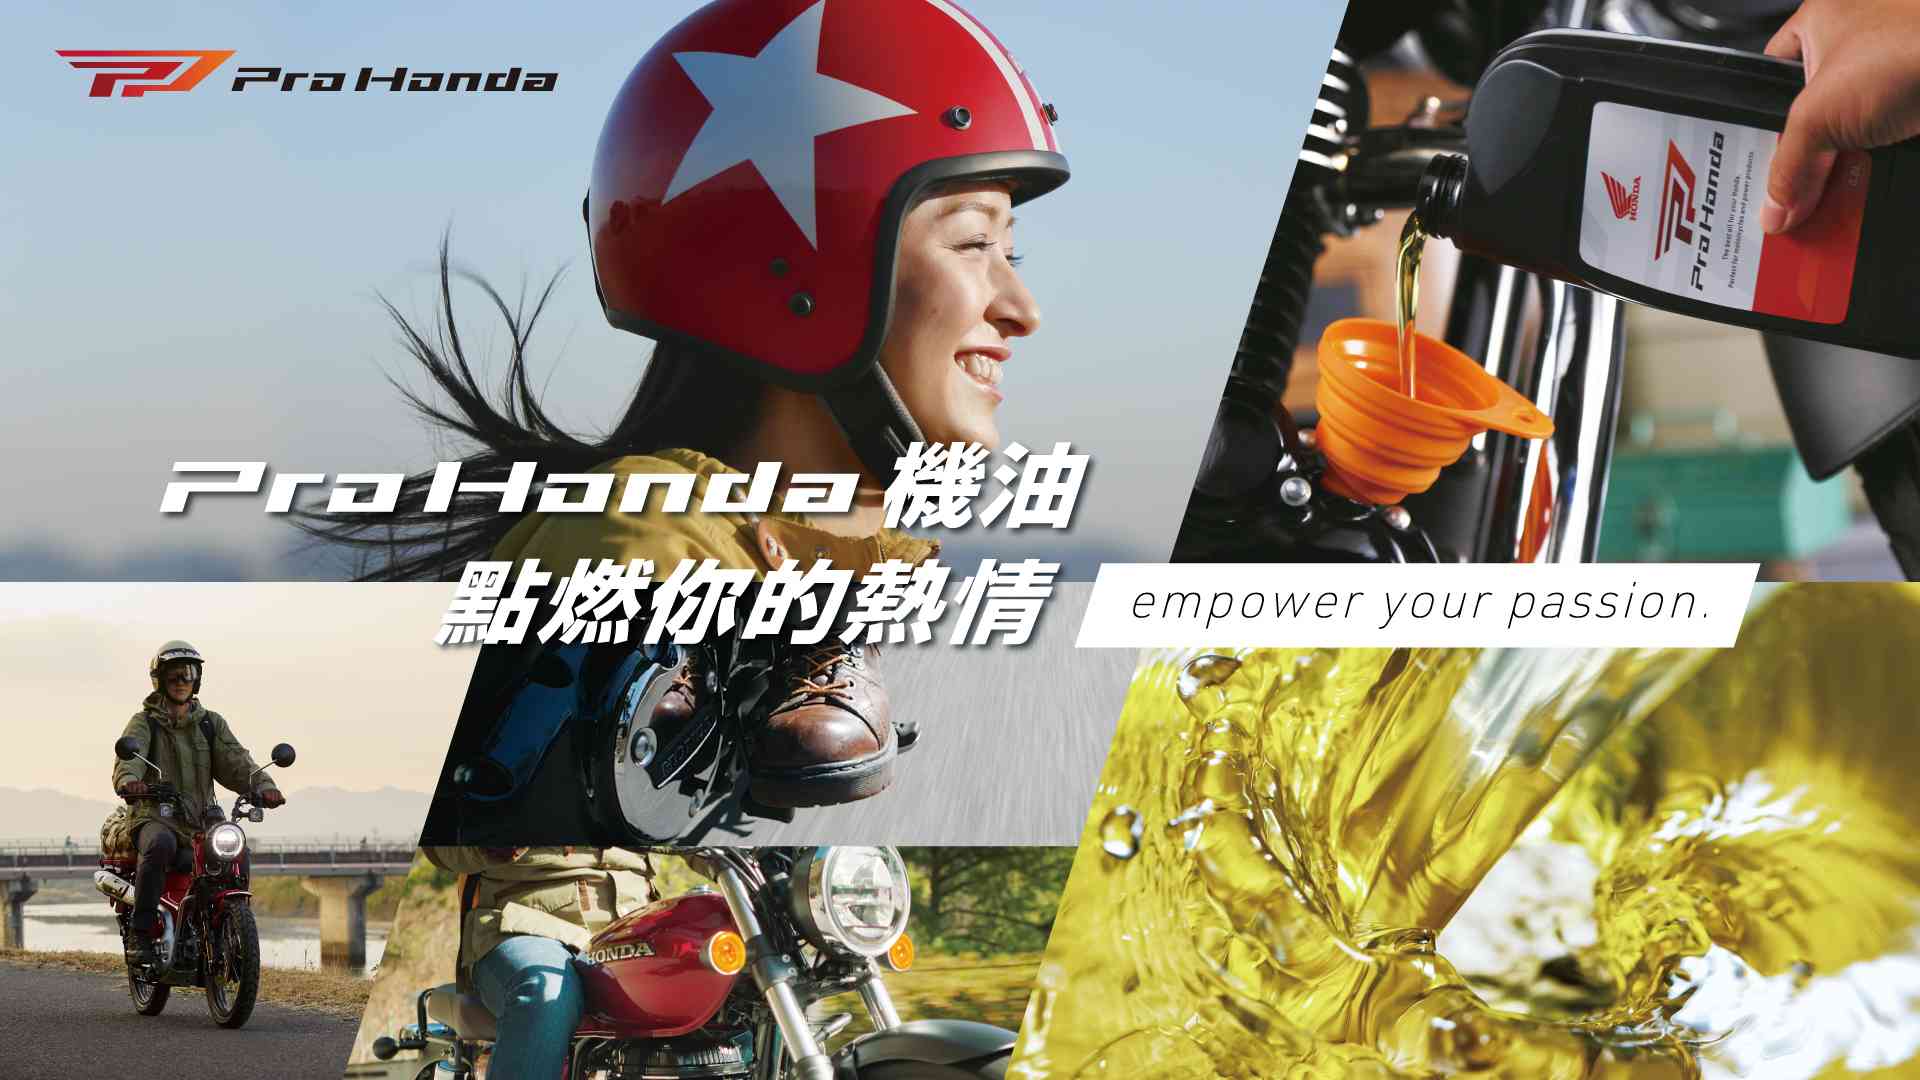 Honda Taiwan 推出全新高品質機油「Pro Honda」Empower your passion 點燃你的熱情~